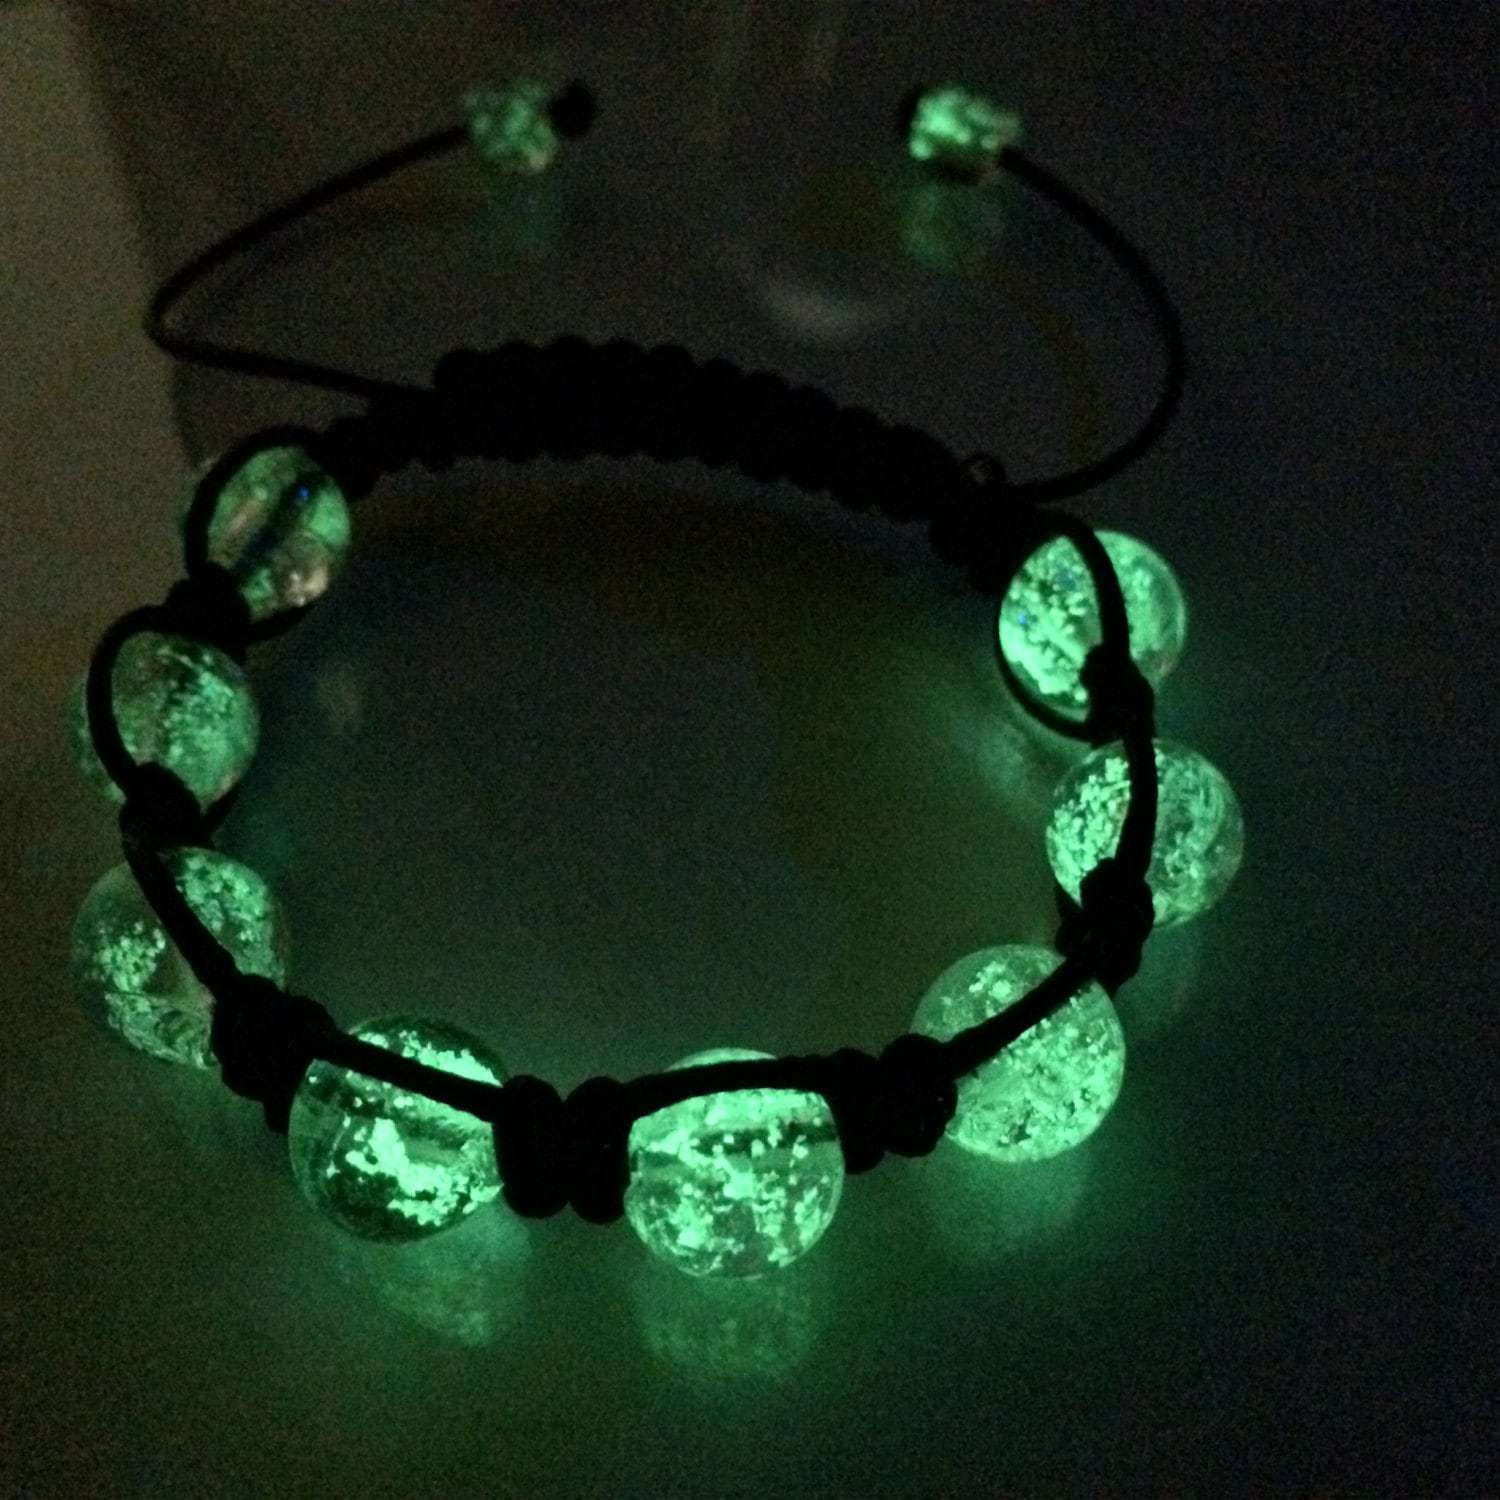 Glow in the dark bracelets 100pcs Glow in the Dark Bracelets Luminous  Silicone Wristband Party Favors